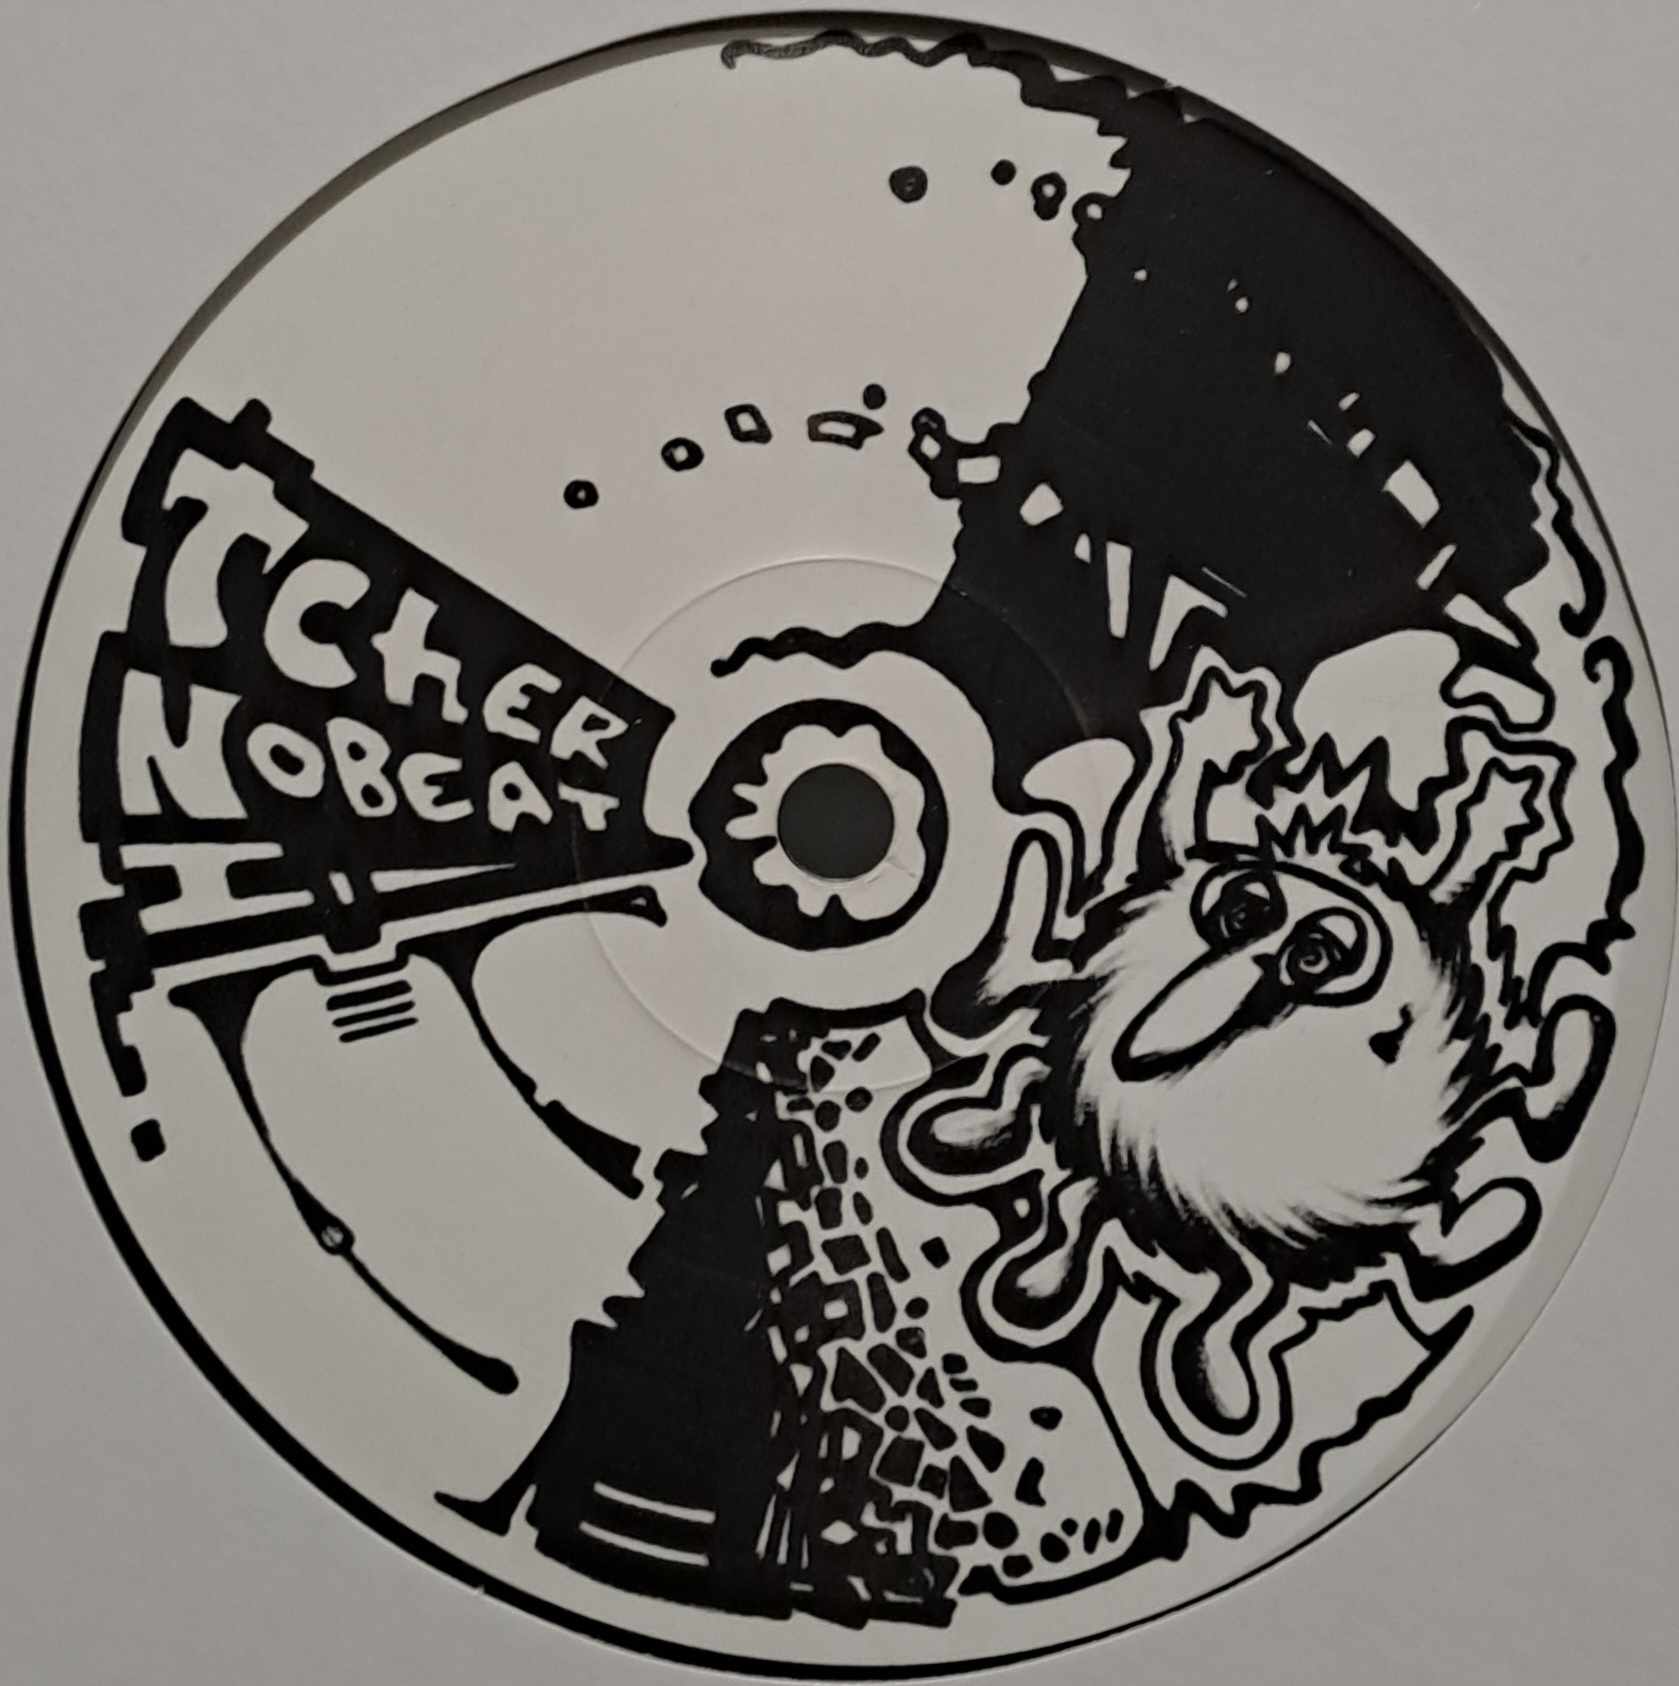 Tcher No Beat 01 (original) - vinyle hardcore